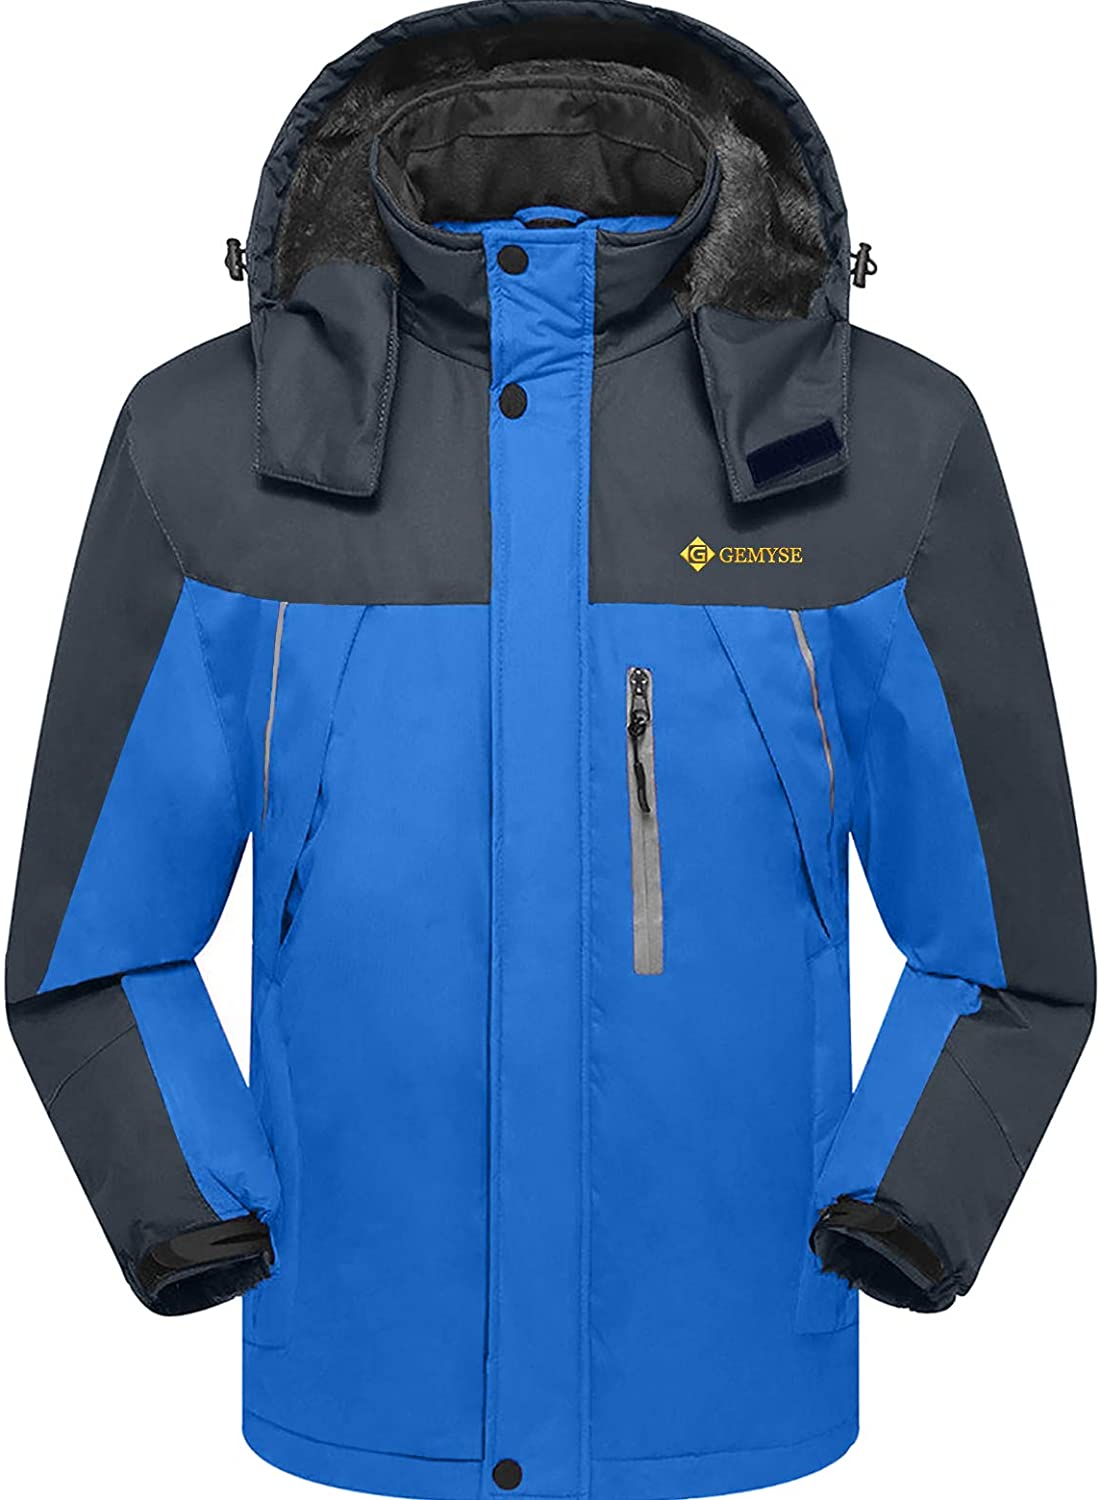 GEMYSE Womens Mountain Waterproof Ski Jacket Windproof Rain Jacket